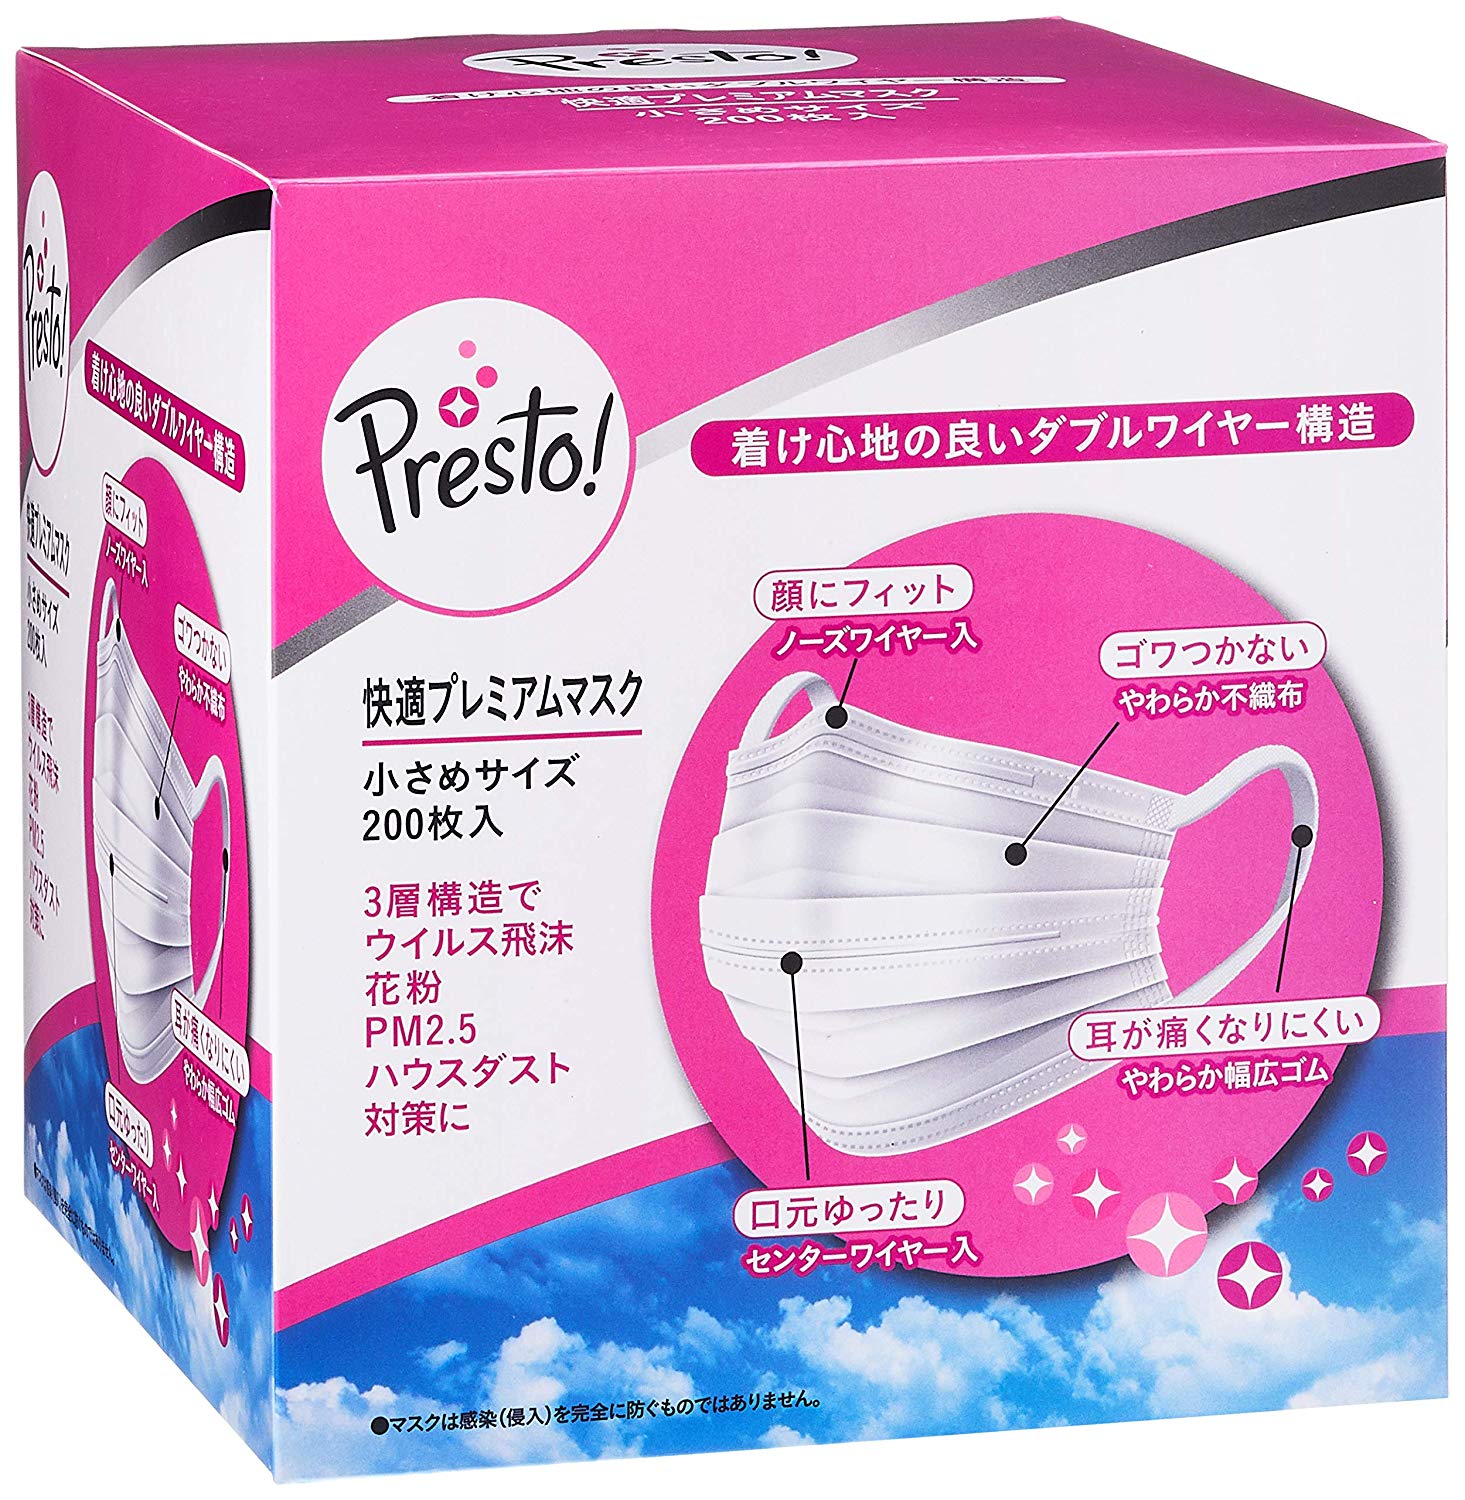 Presto! Japan Mask 200 piece (Small size)